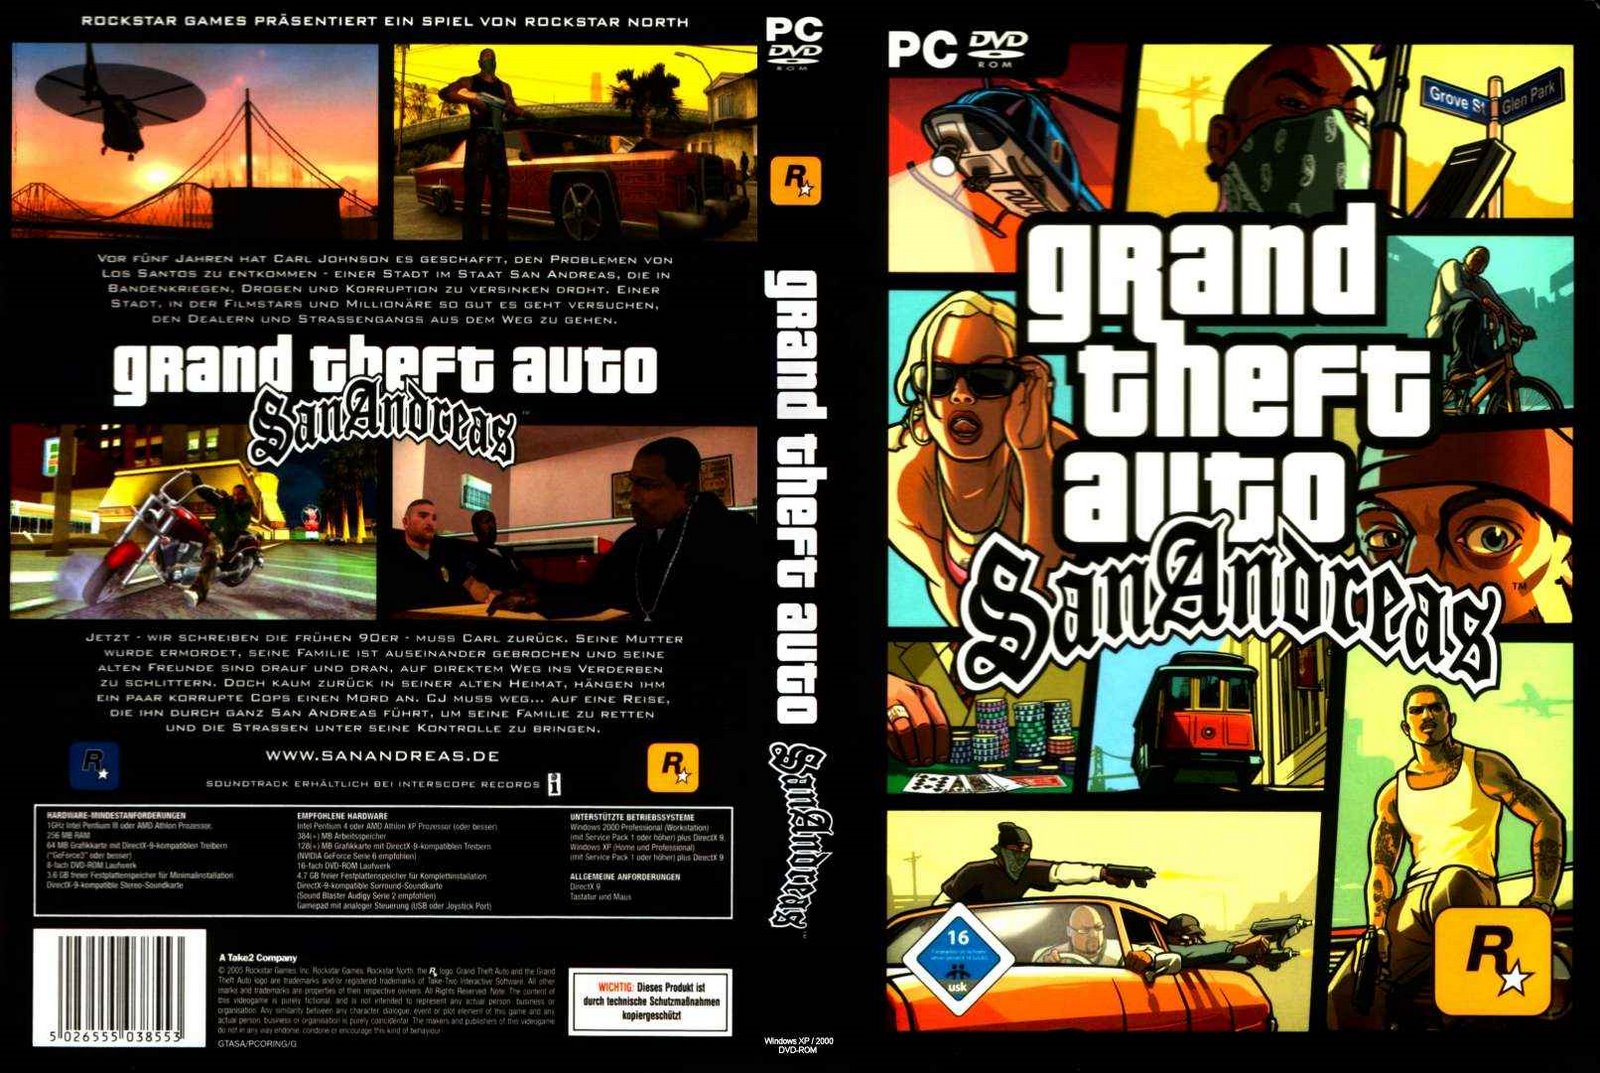 Cheats for PC - GTA SA / Grand Theft Auto: San Andreas